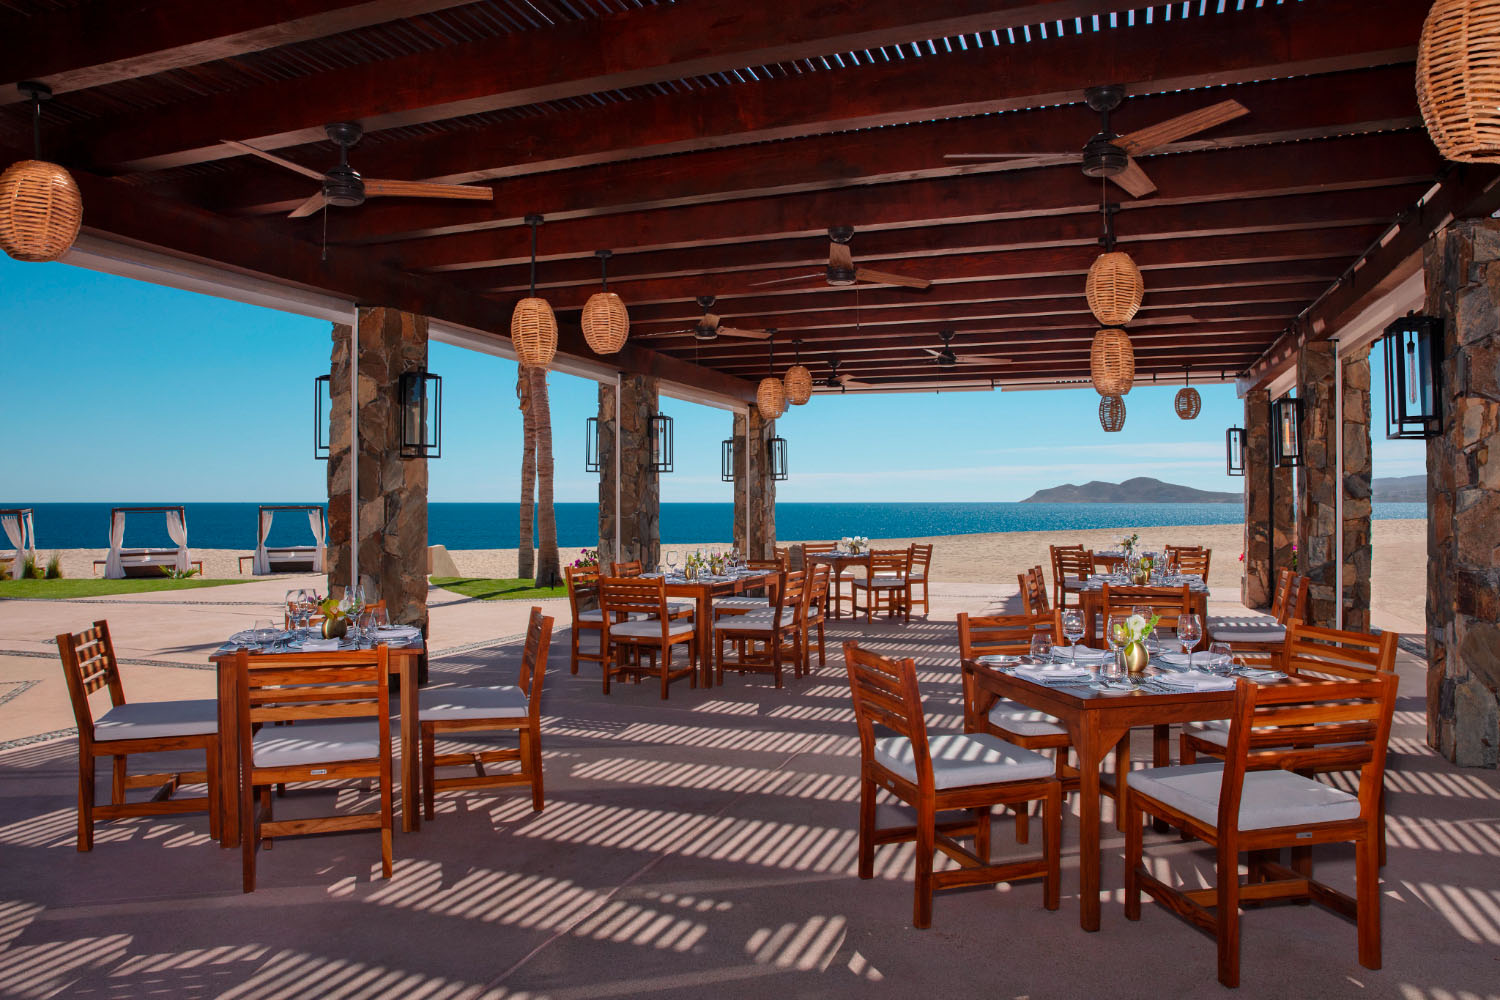 Zoëtry Casa del Mar Los Cabos restaurant | GlobeQuest Blog